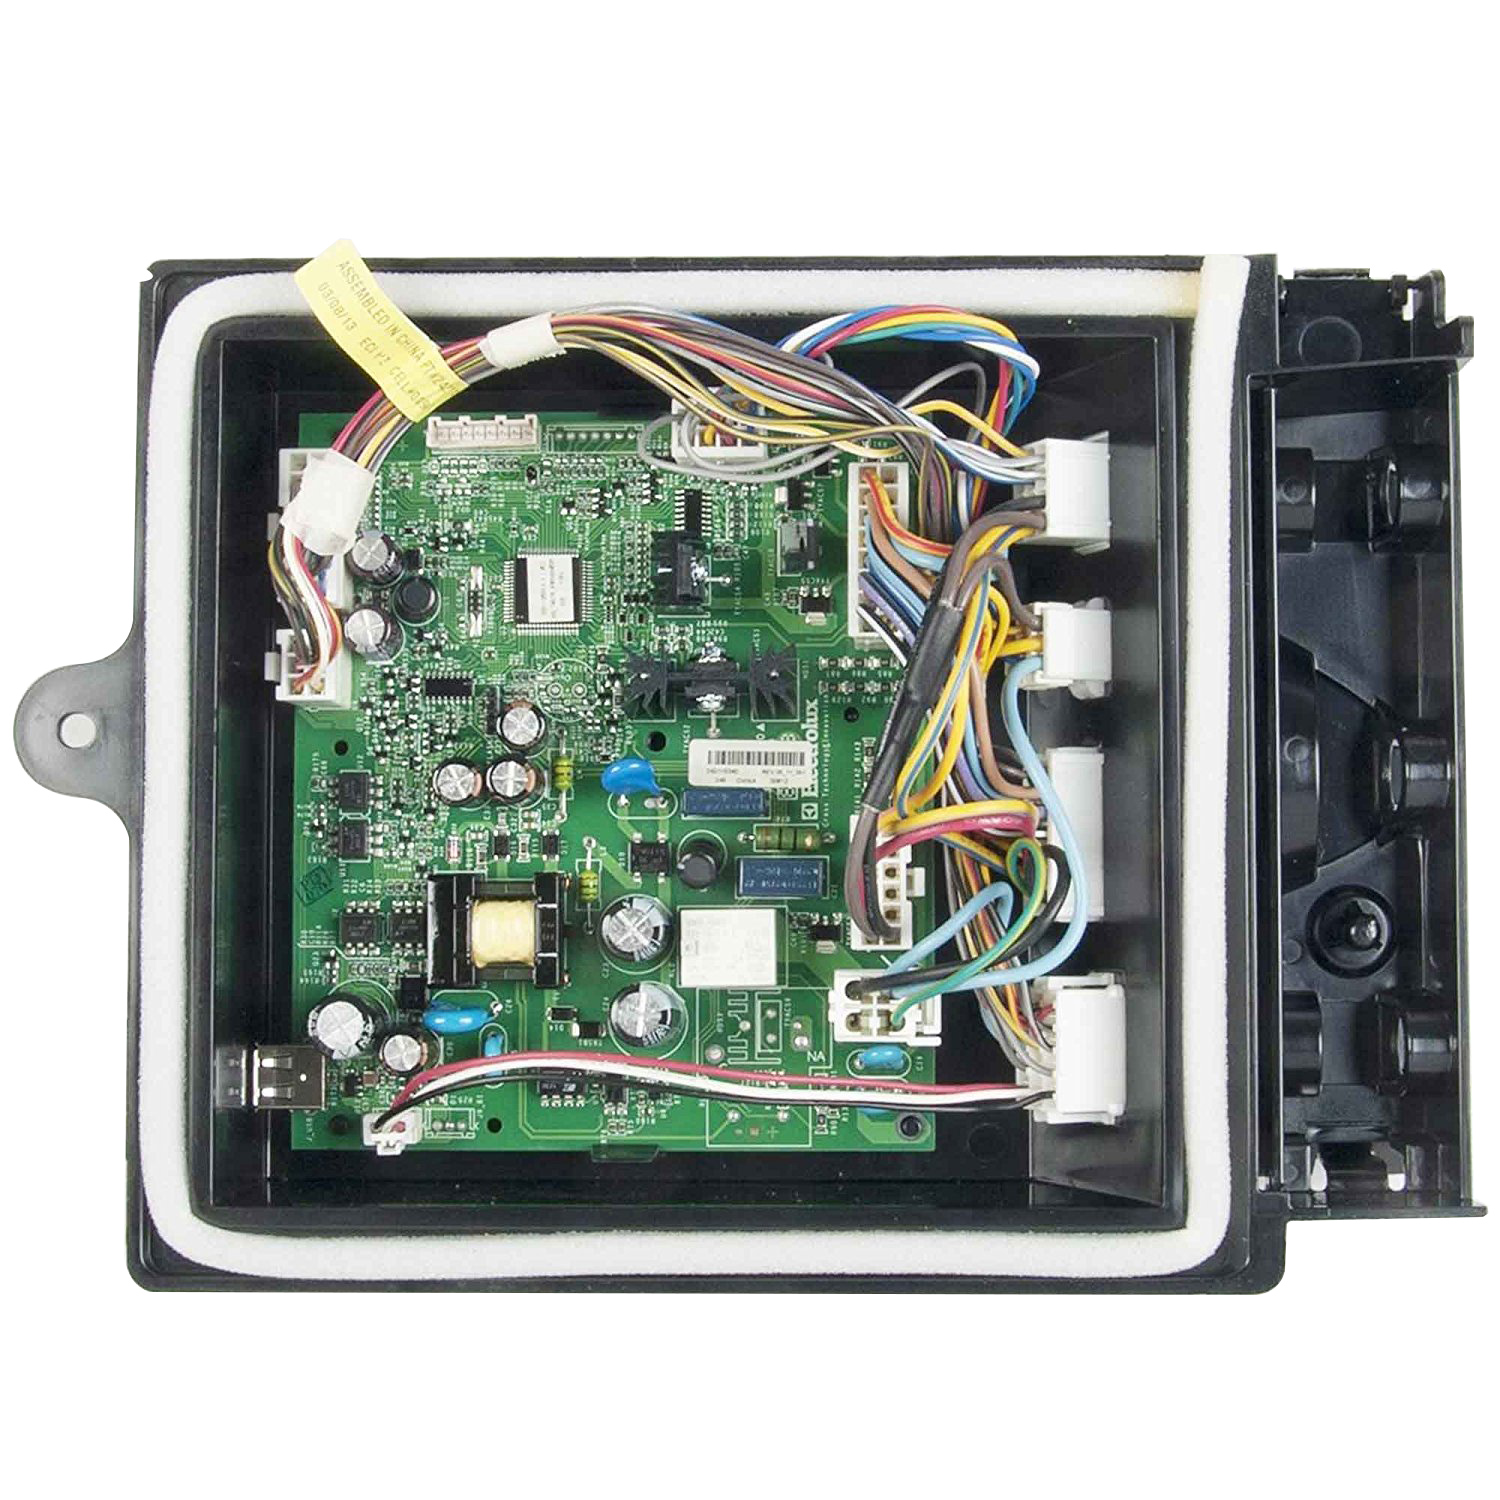 242115240 or 242115204 Details about   NEW ORIGINAL Frigidaire Refrigerator Main Control Board 